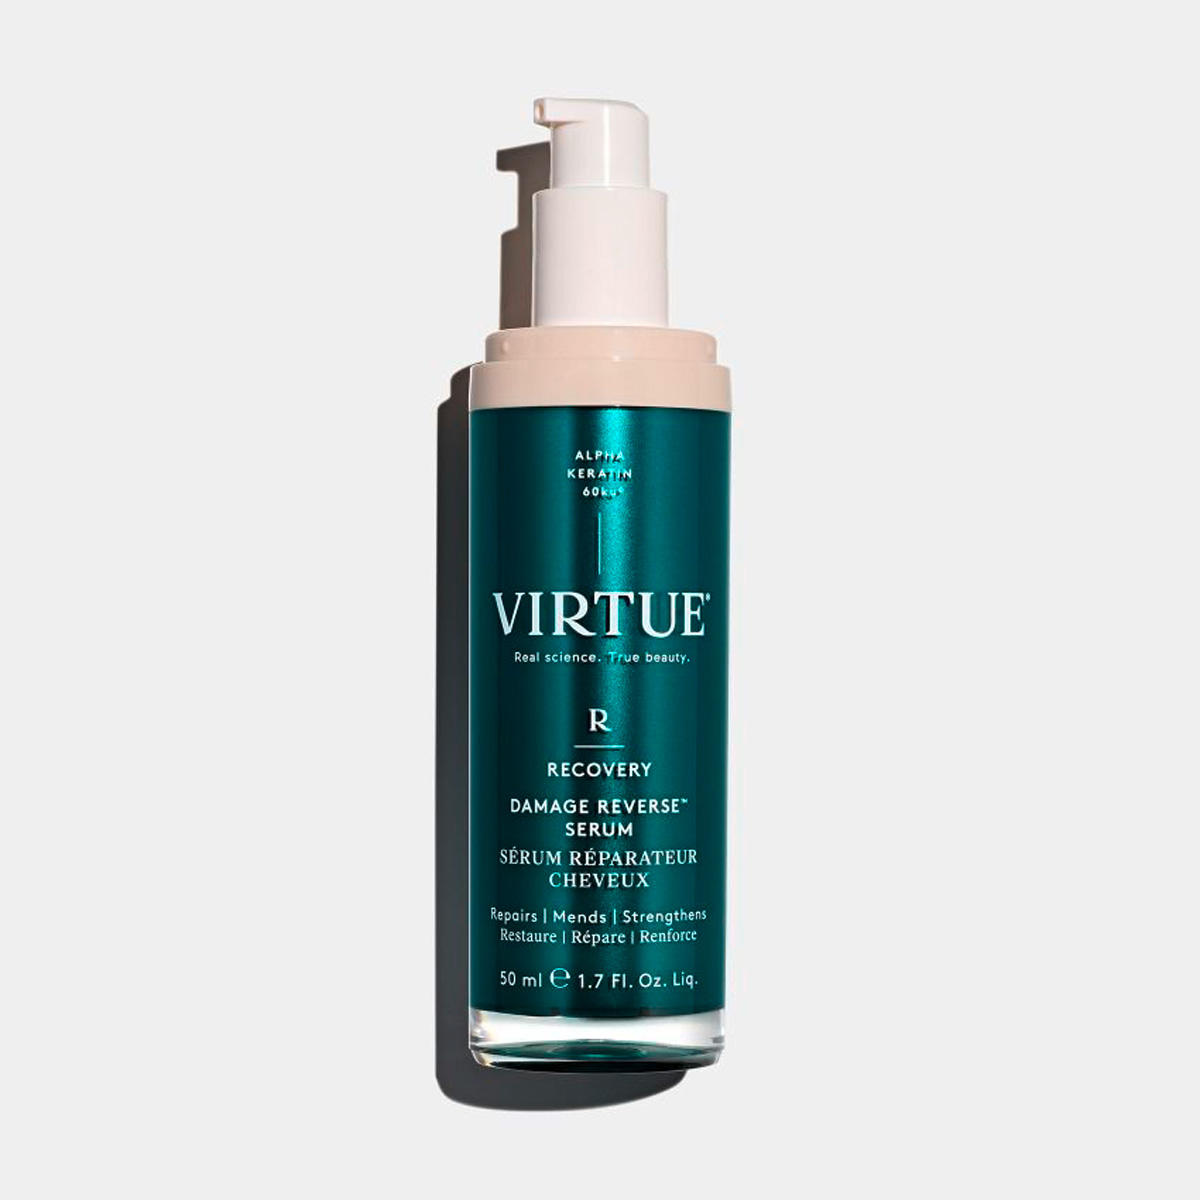 Virtue Recovery Damage Reverse Serum 50 ml - 2